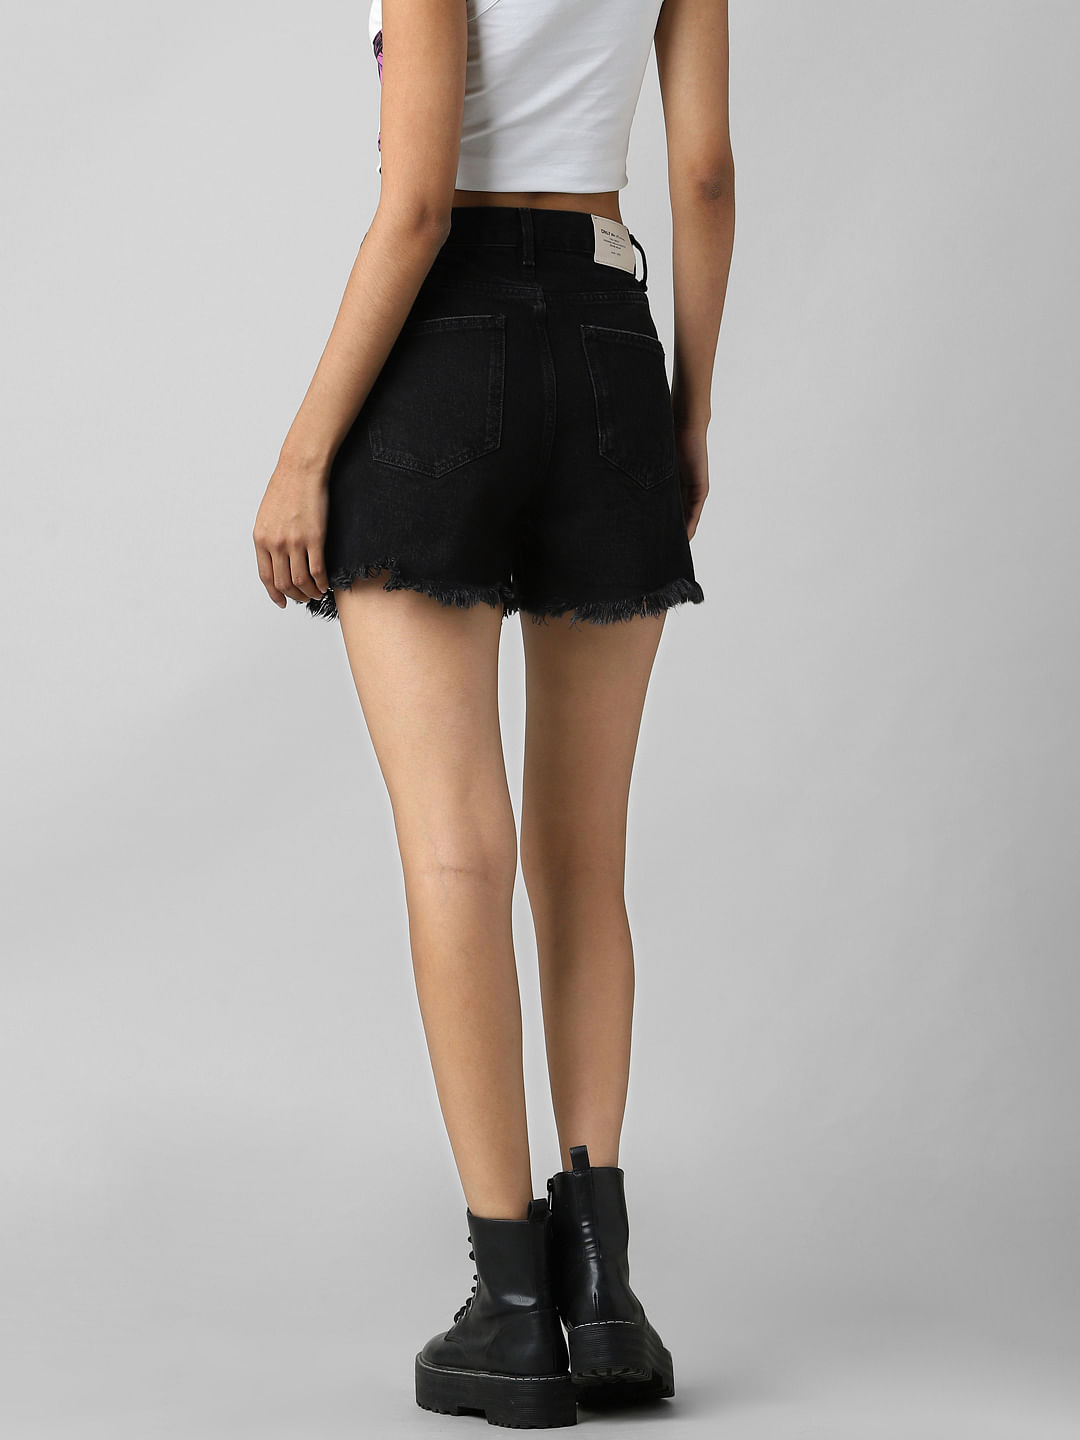 Studded denim shorts black | Trendy Shorts - Lush Fashion Lounge